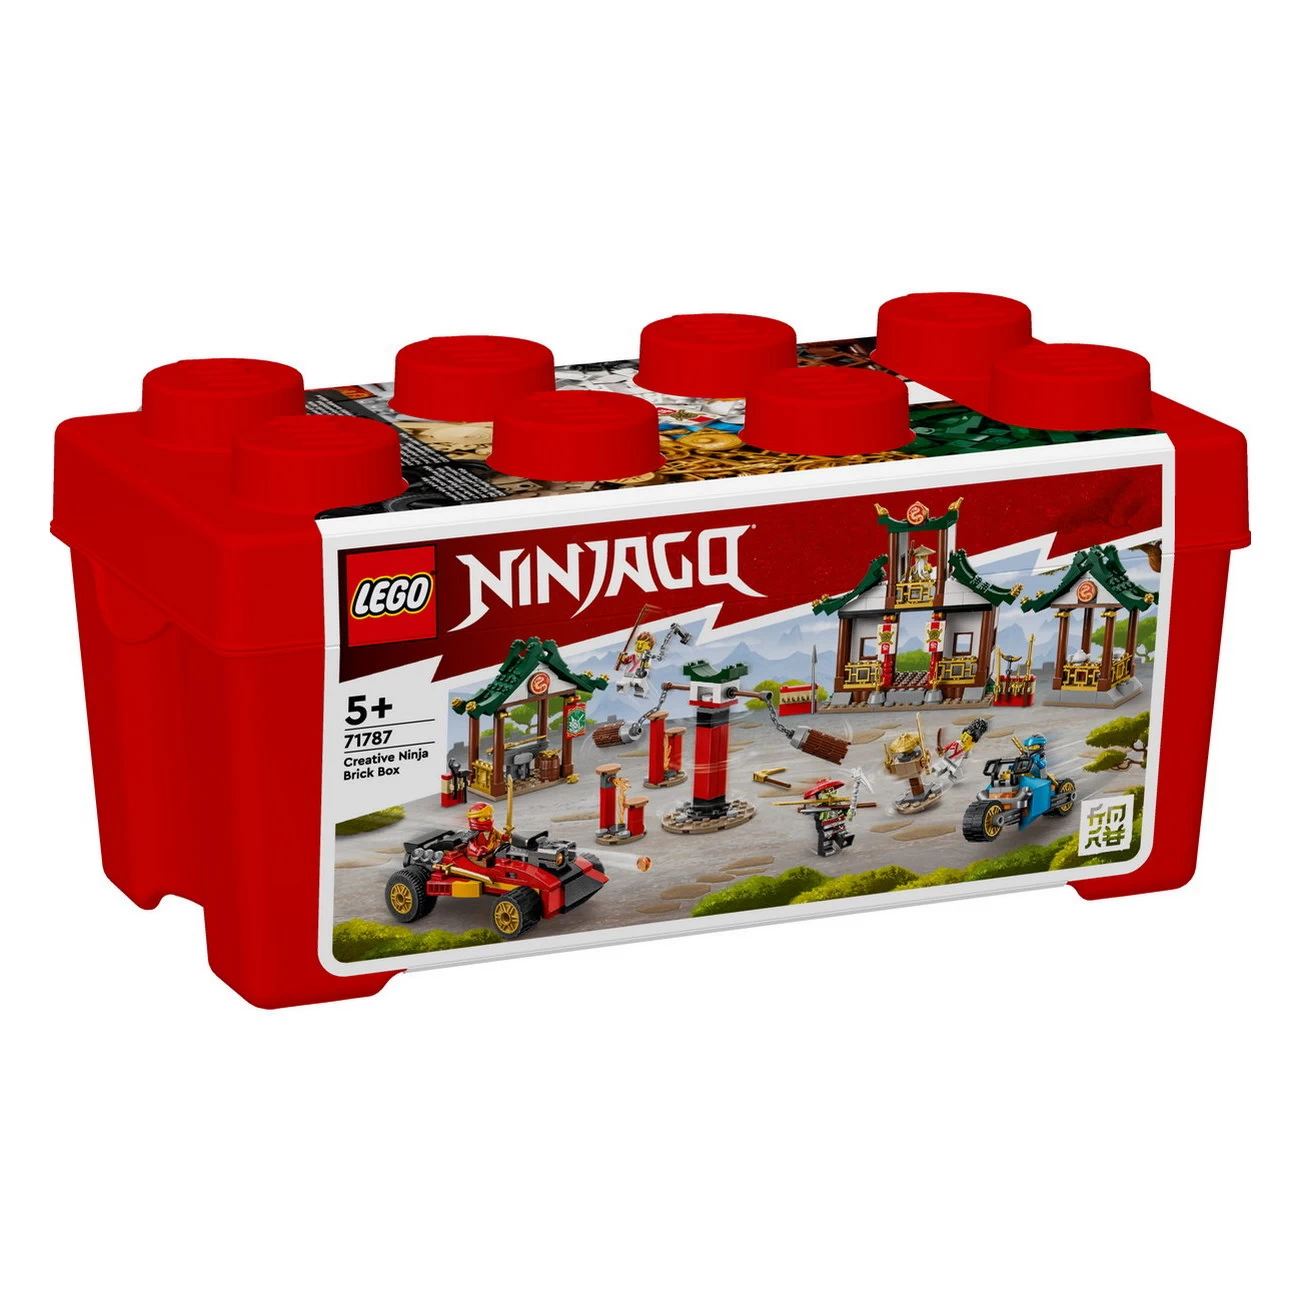 LEGO NINJAGO 71787 - Kreative Ninja Steinebox